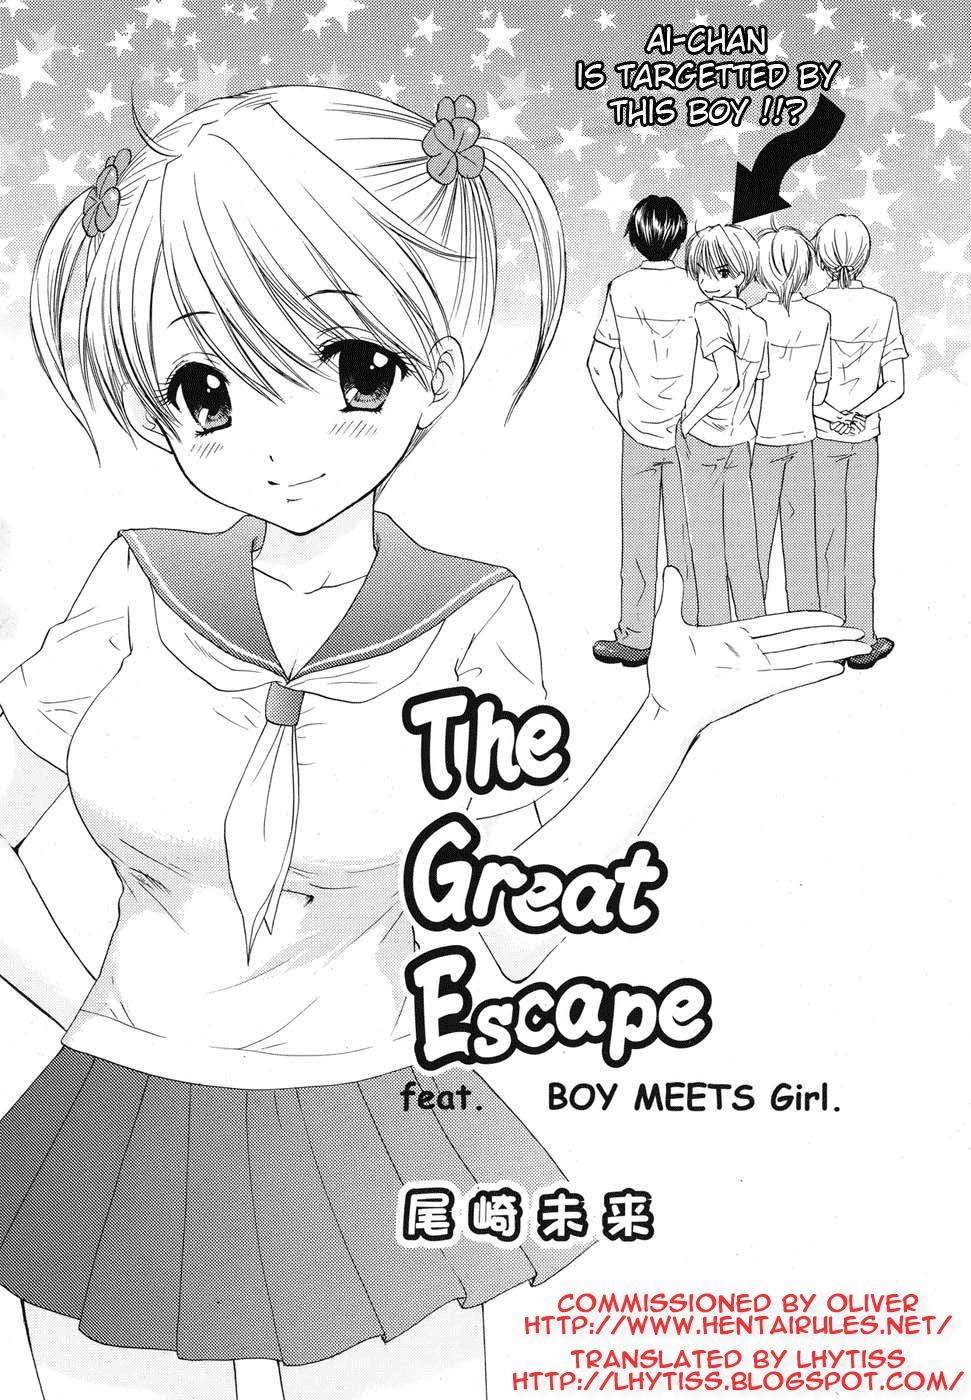 [Miray Ozaki] The Great Escape Feat. Boy Meets Girl [English] [Hentairules] 